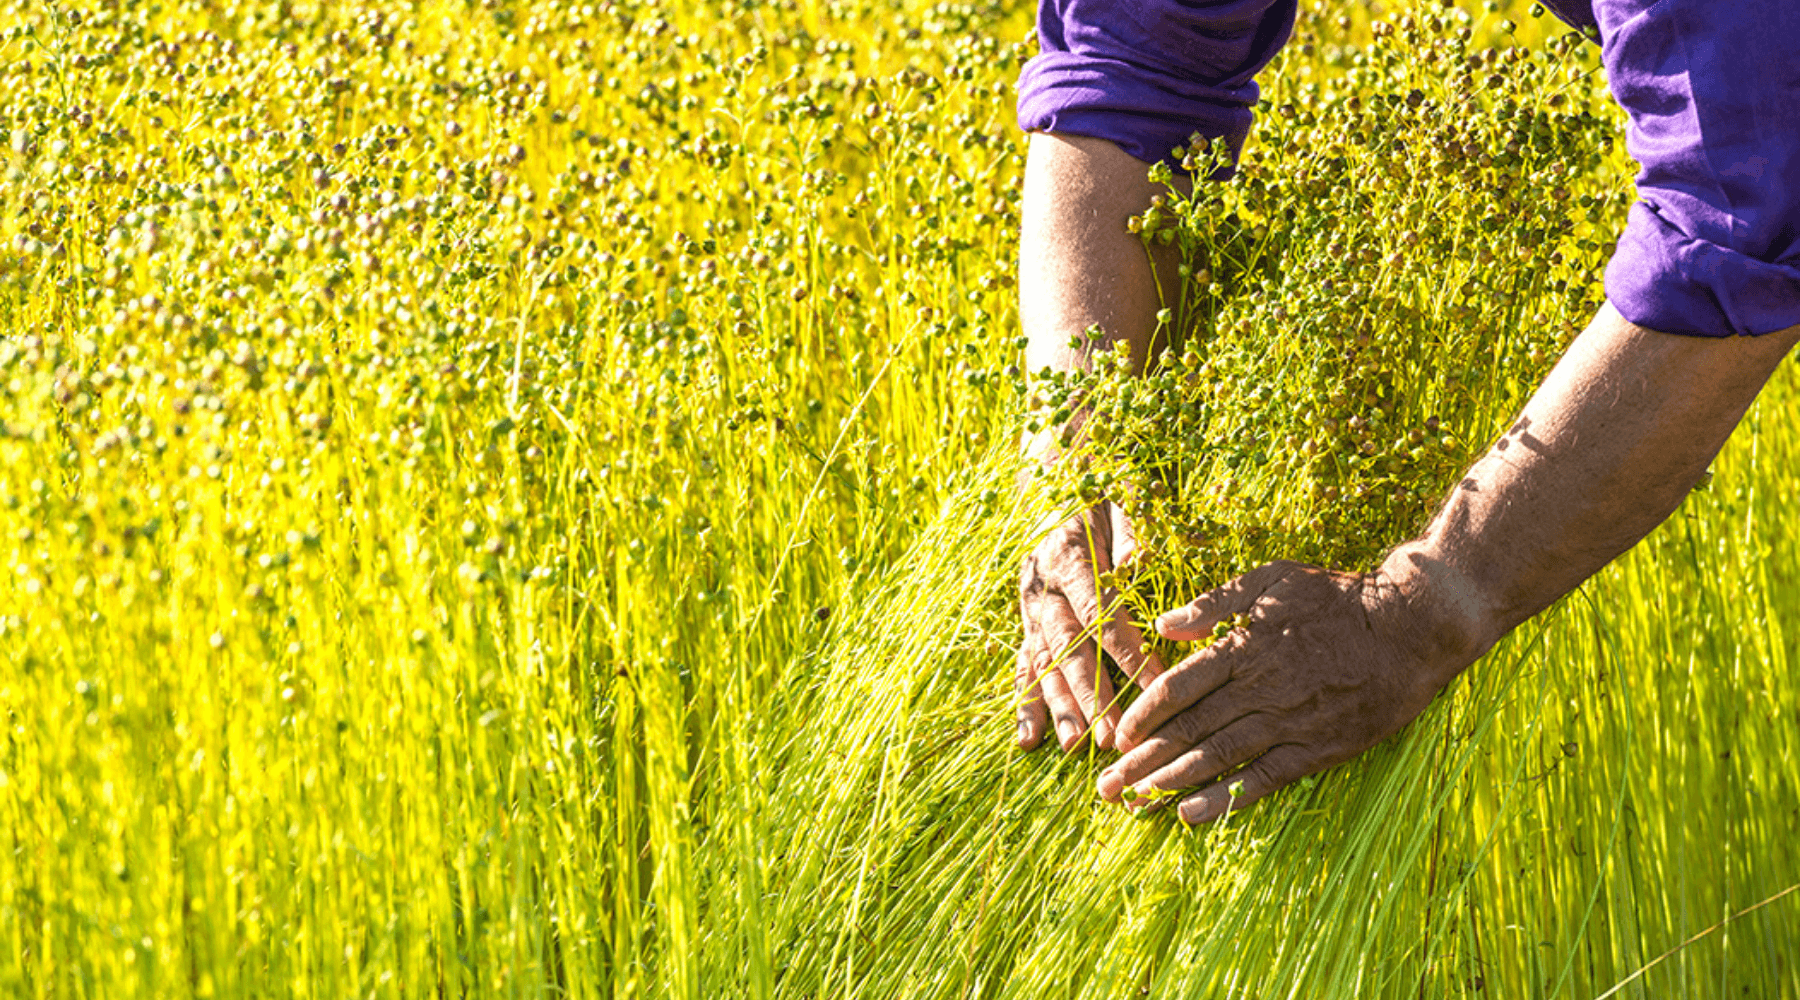 Hands combing through organic european flax linen growing in the field